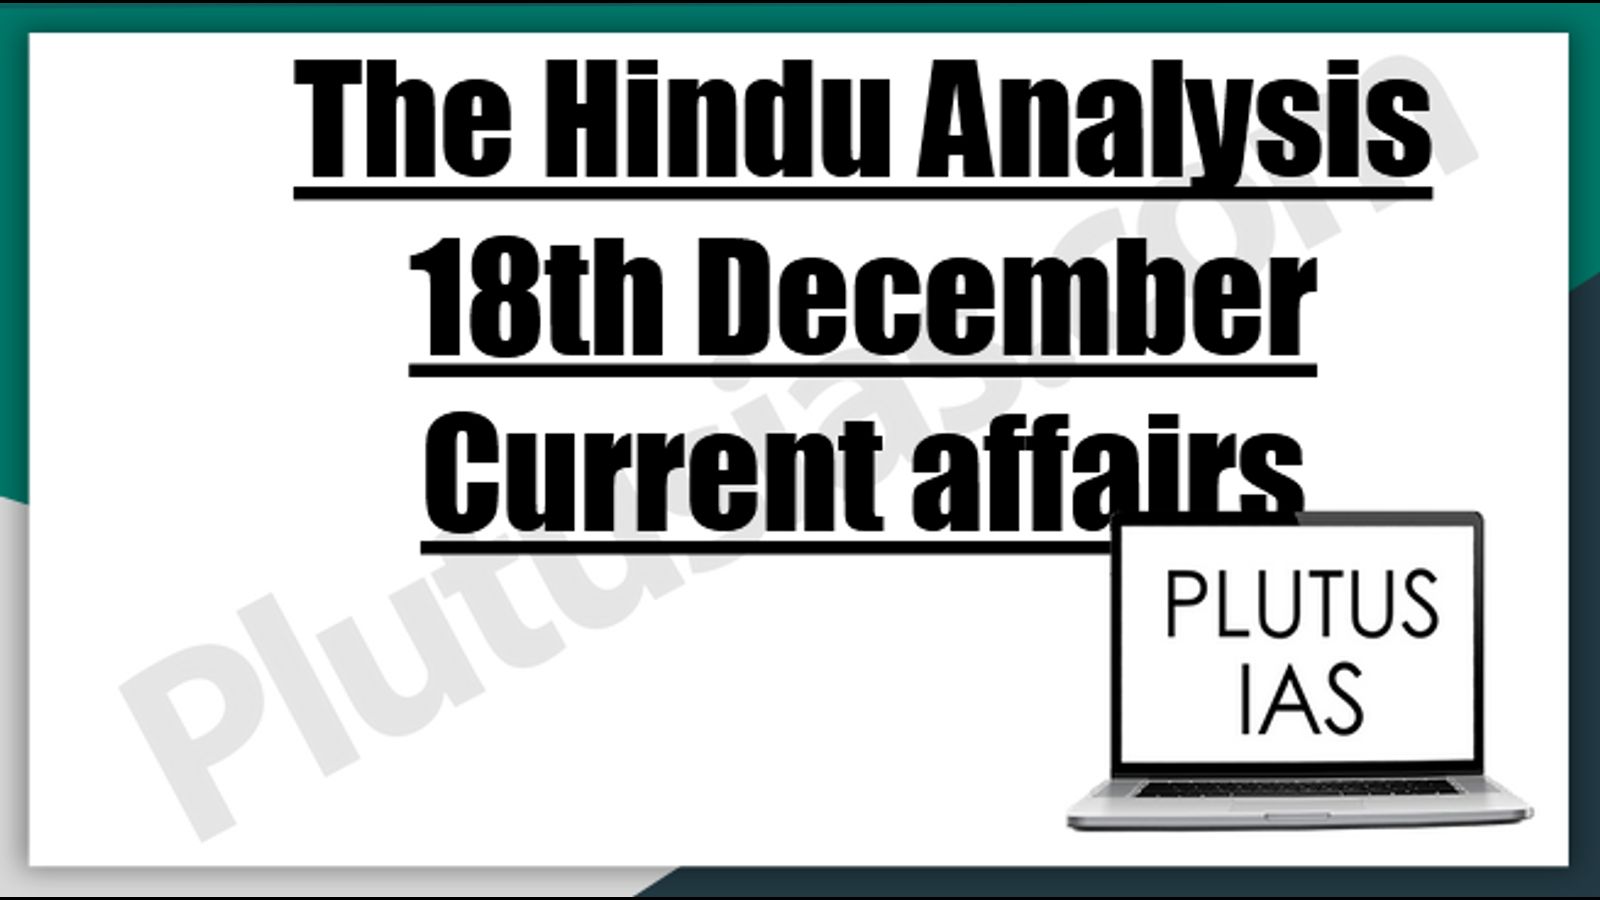 The Hindu Analysis 18 December